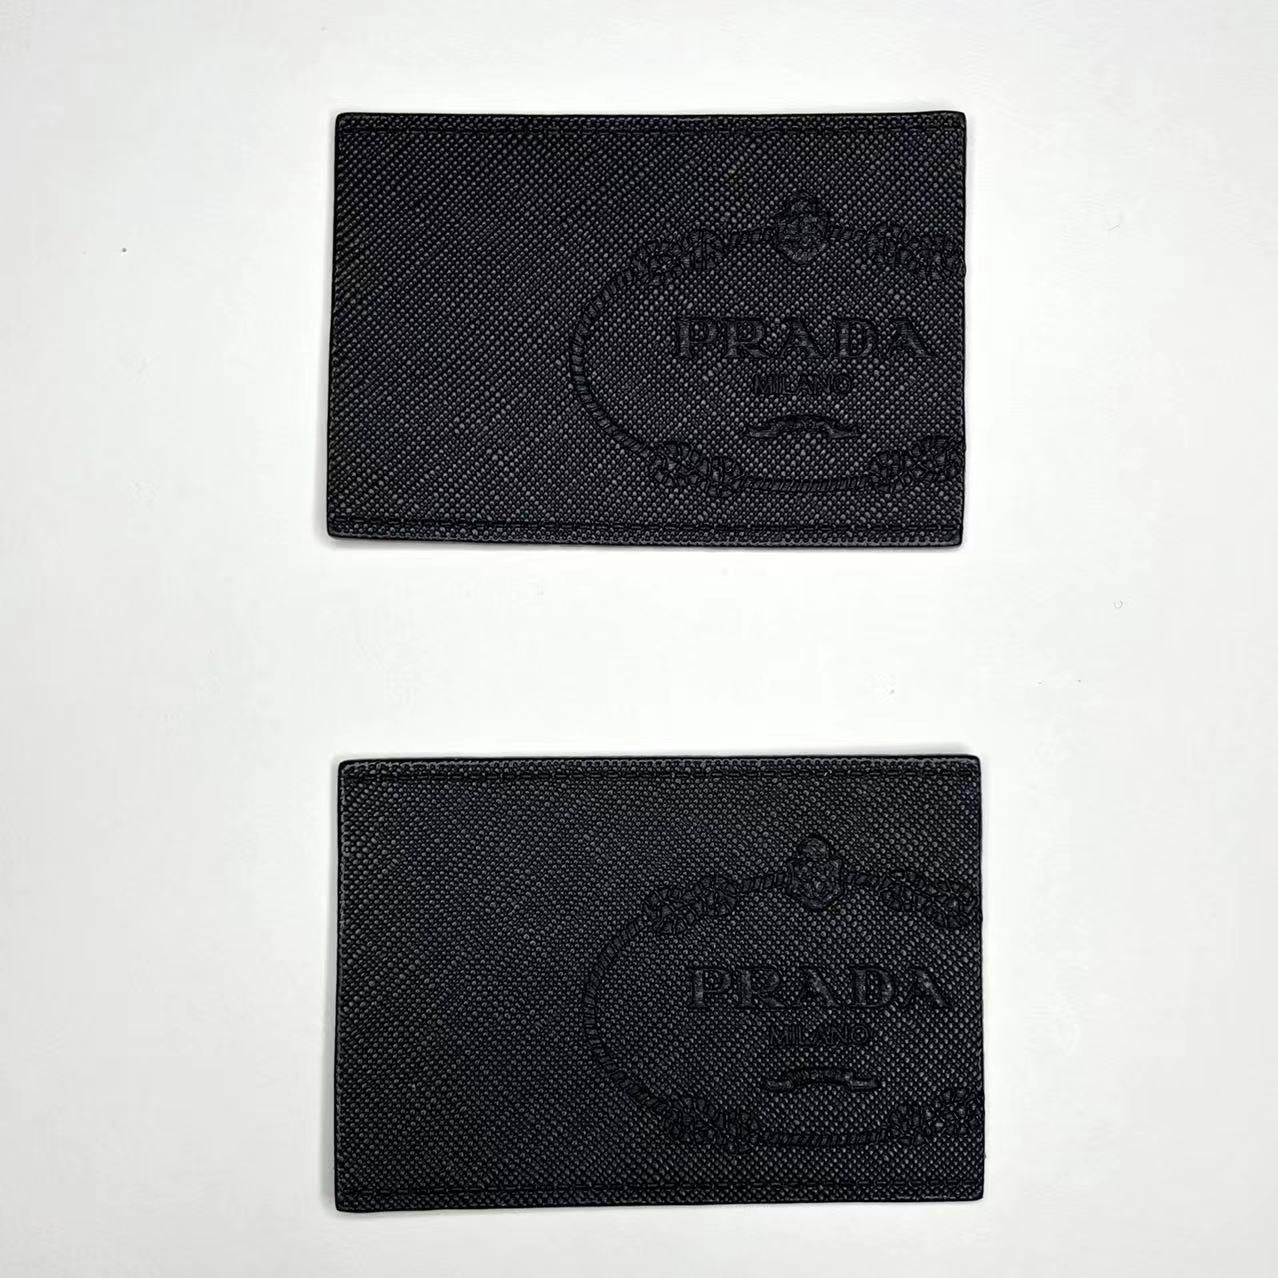 Genuine Leather Prada Card for Custom Handmade Crafted